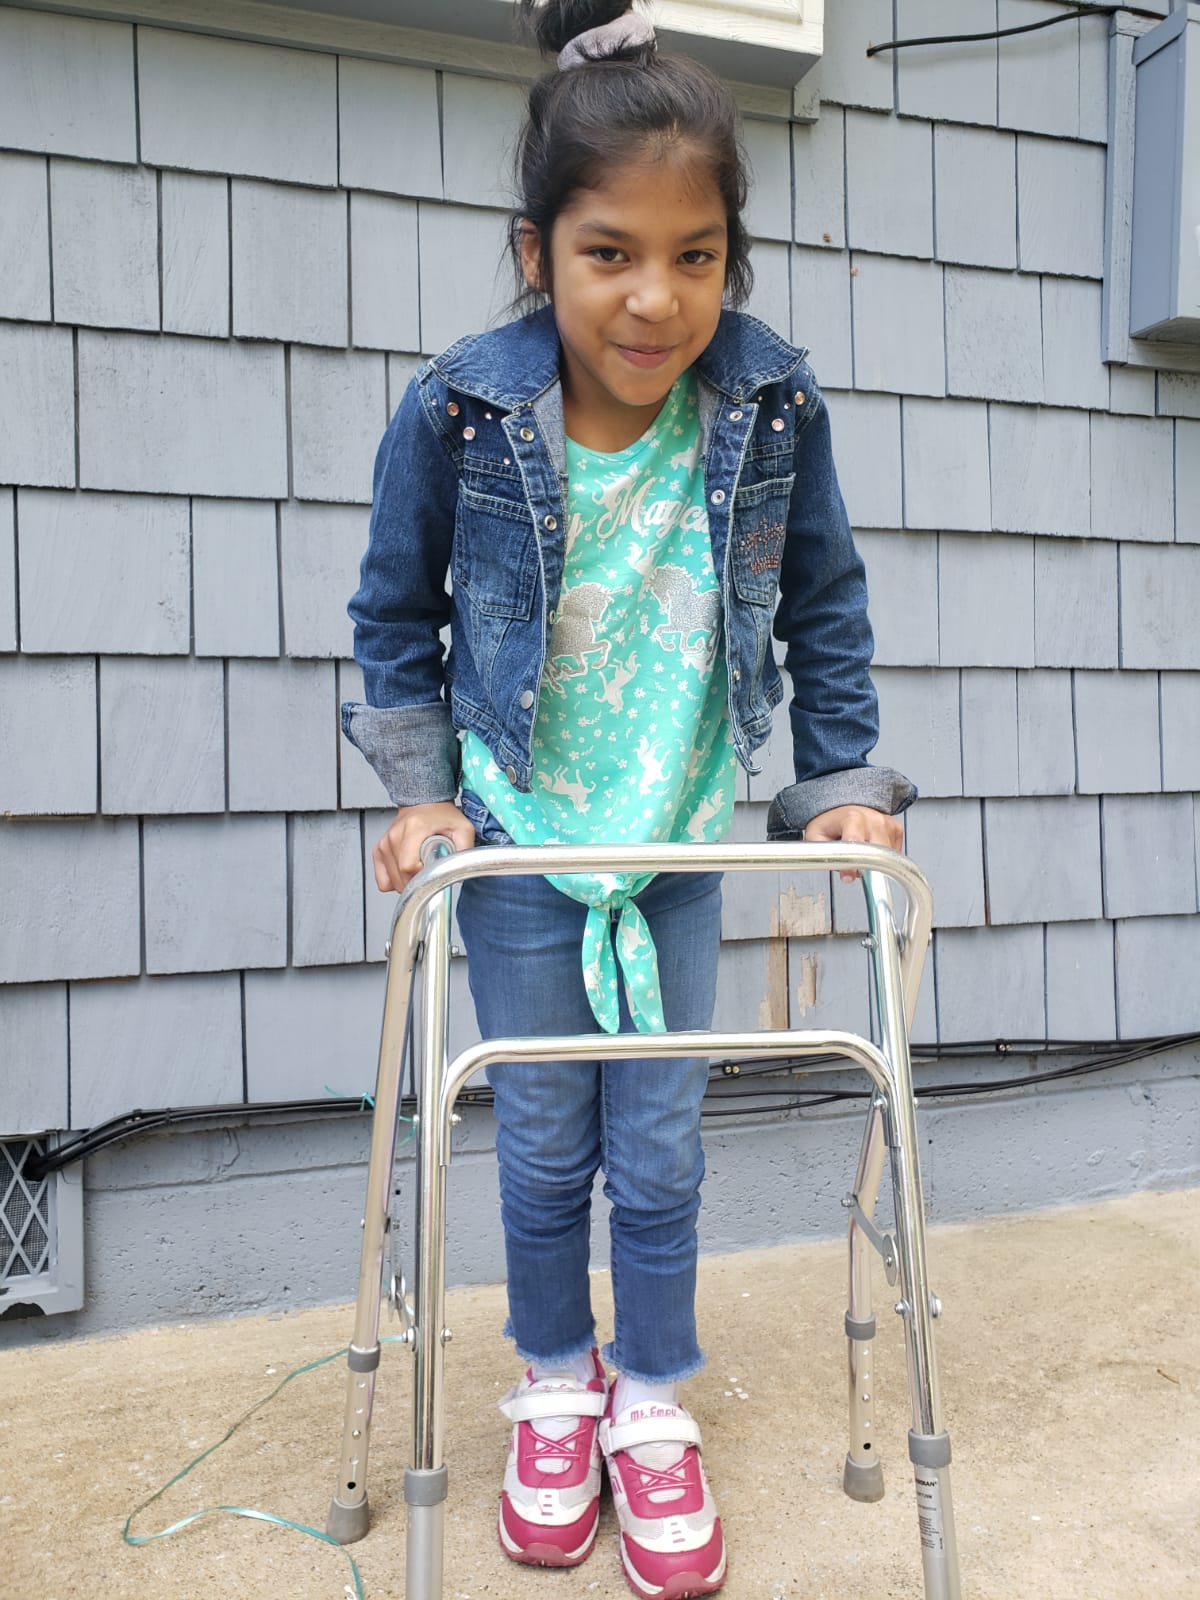 Anabella T NS Wheelchairs 4 Kids